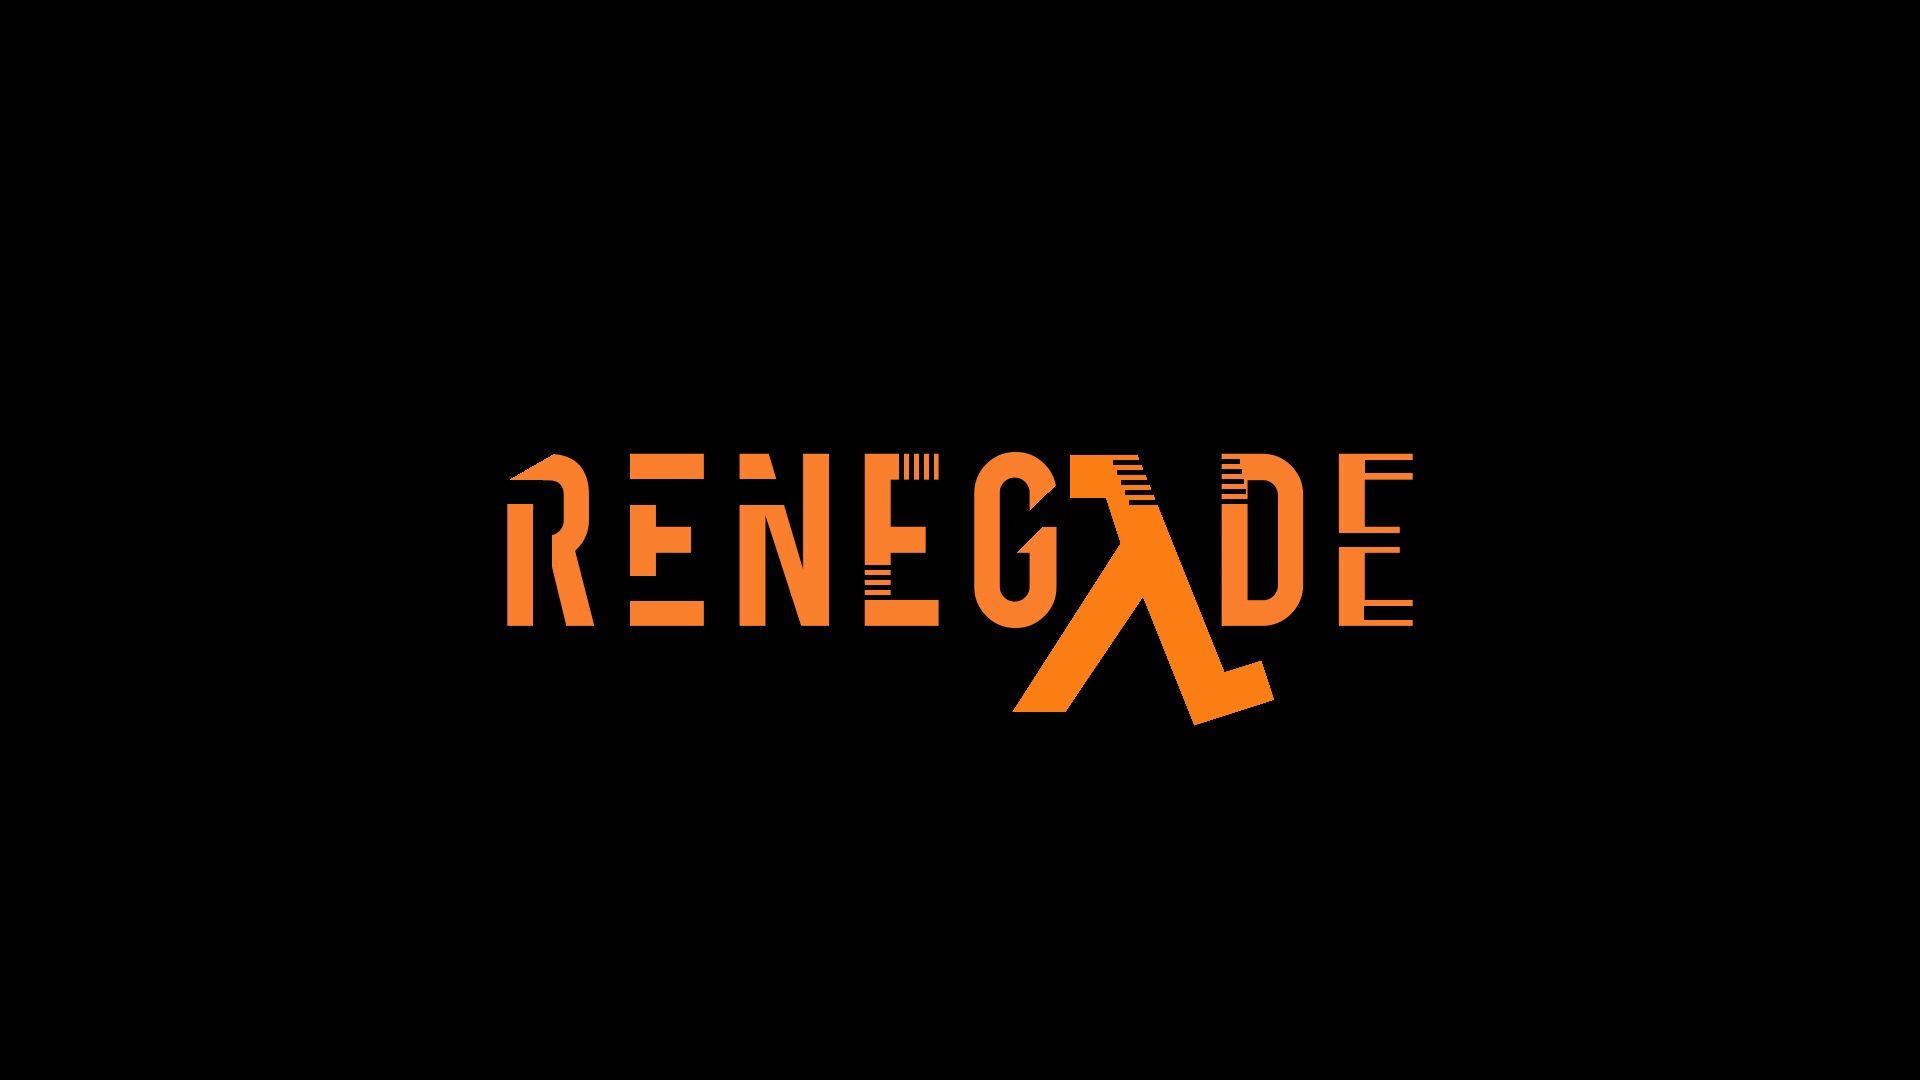 Renegade Logo - Renegade | Logo Designs | Movie posters, Logos design, Logos